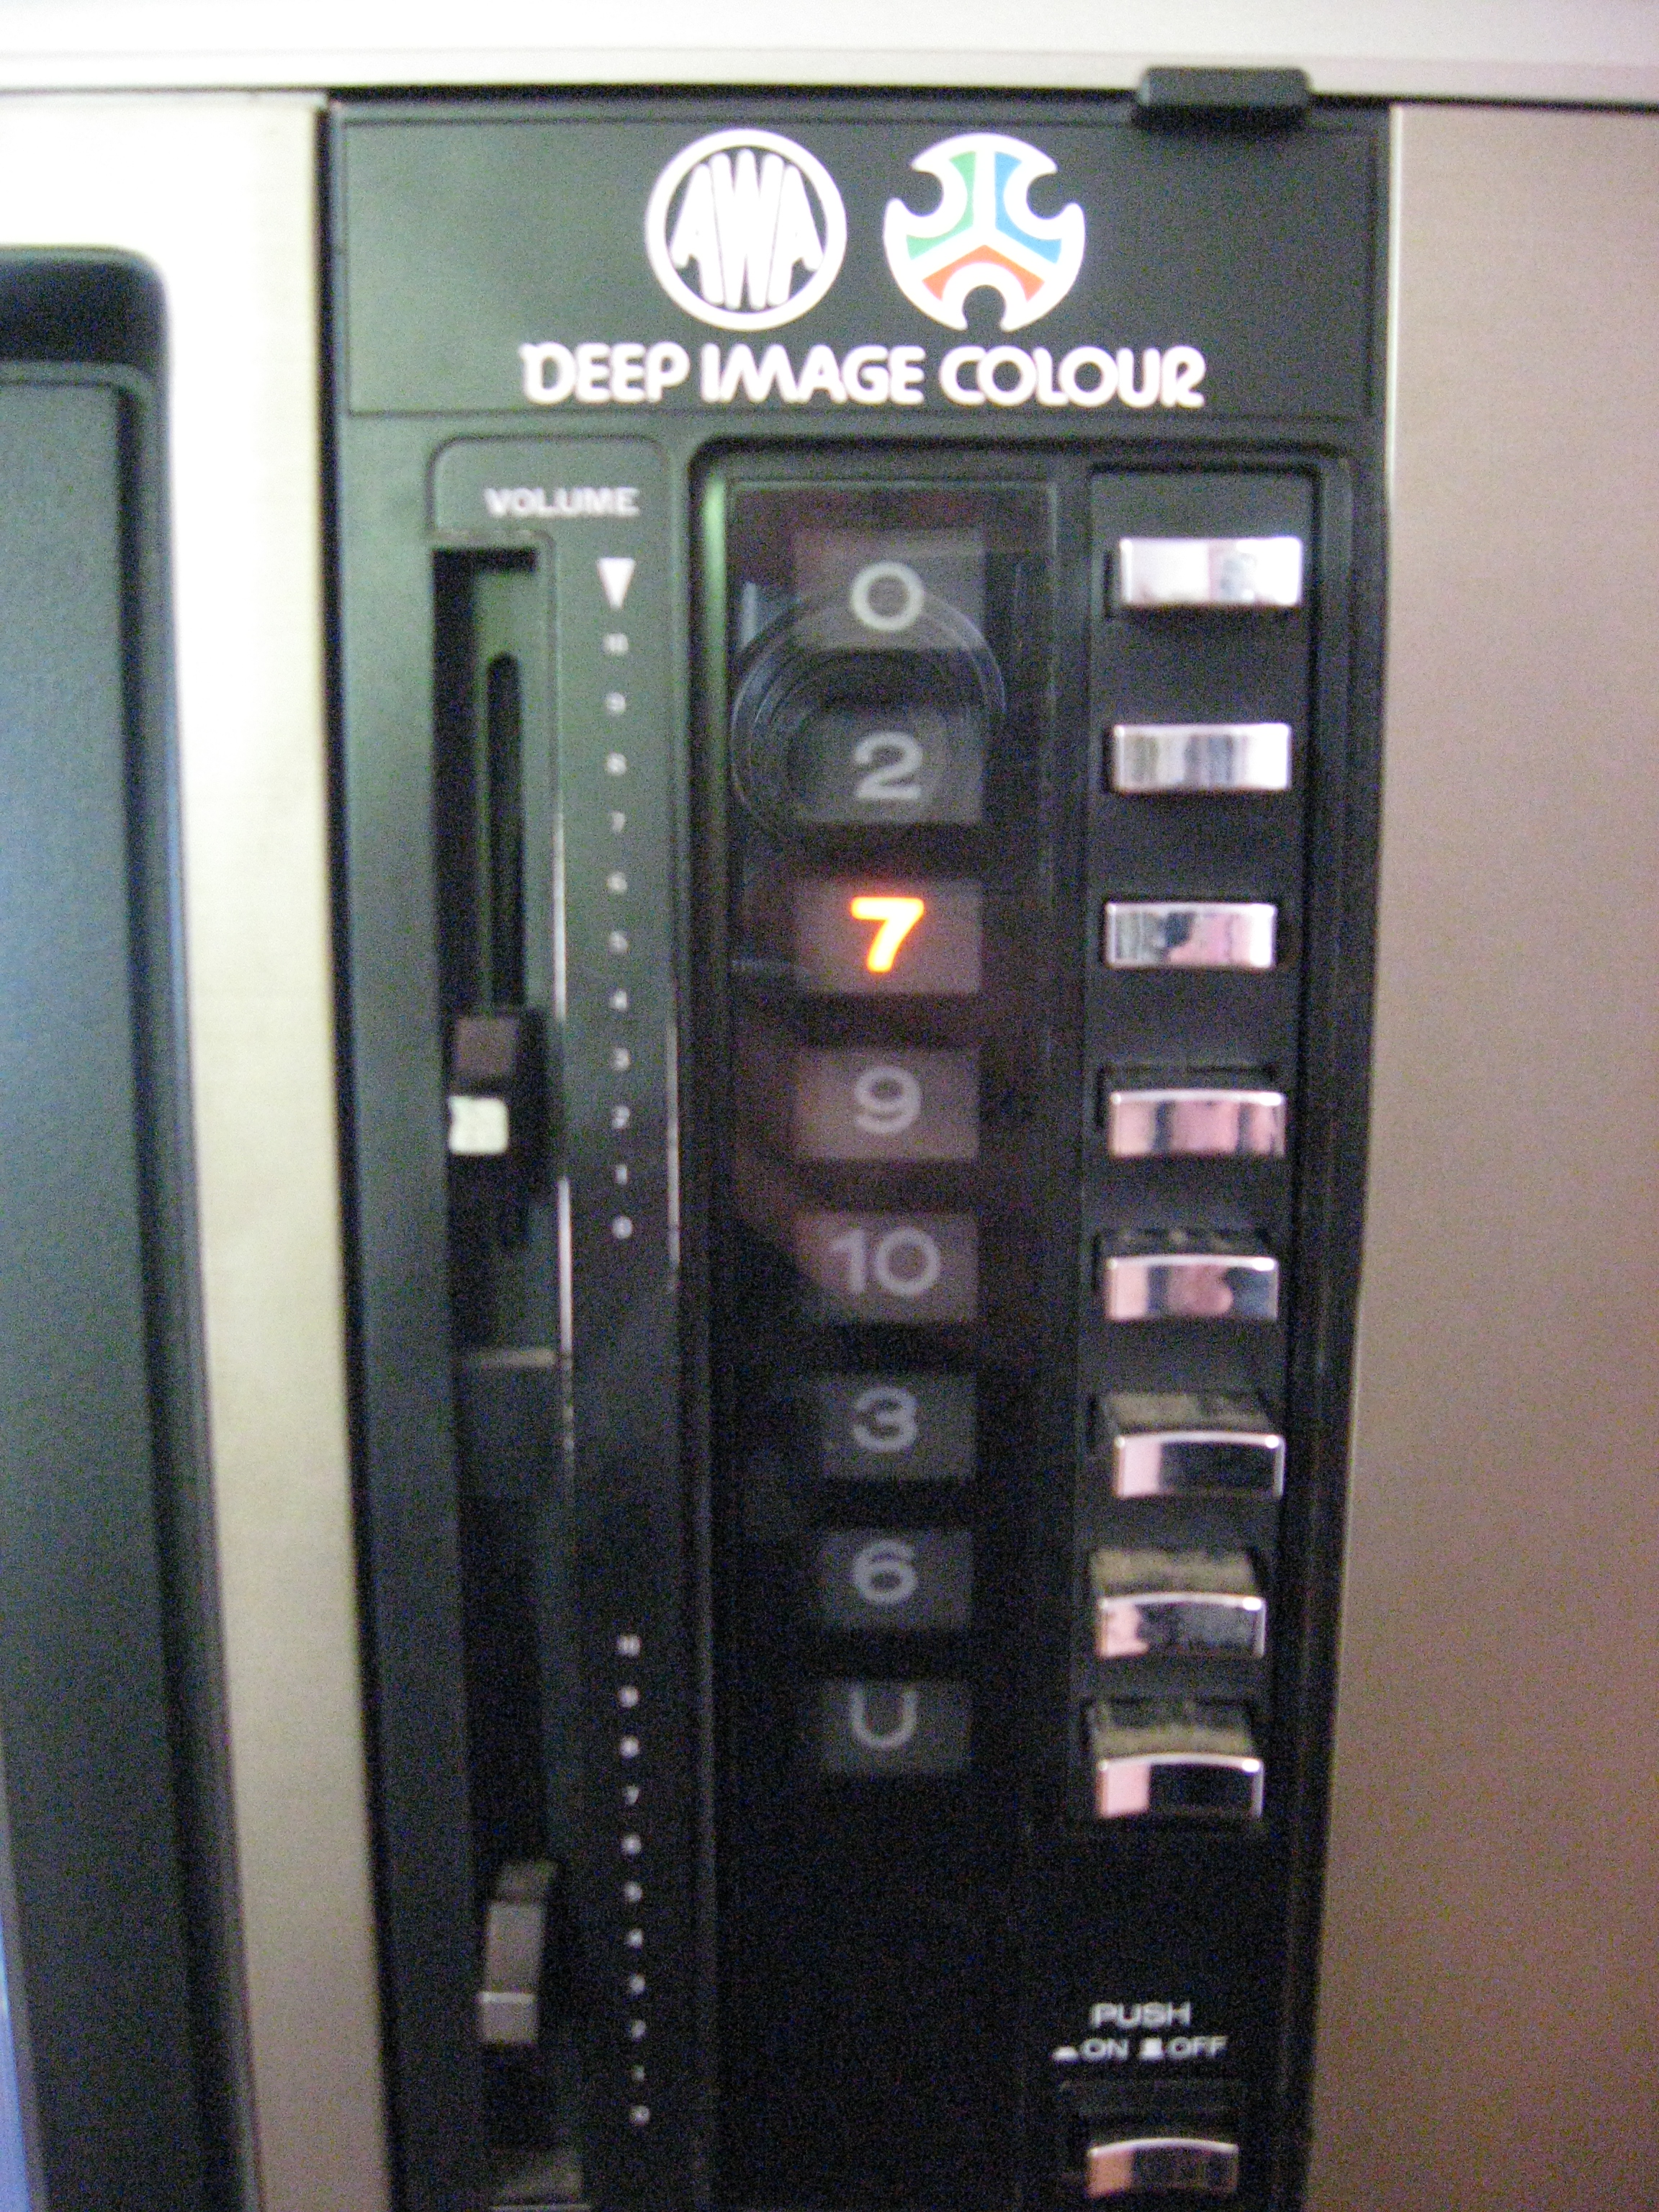 AWA colour television